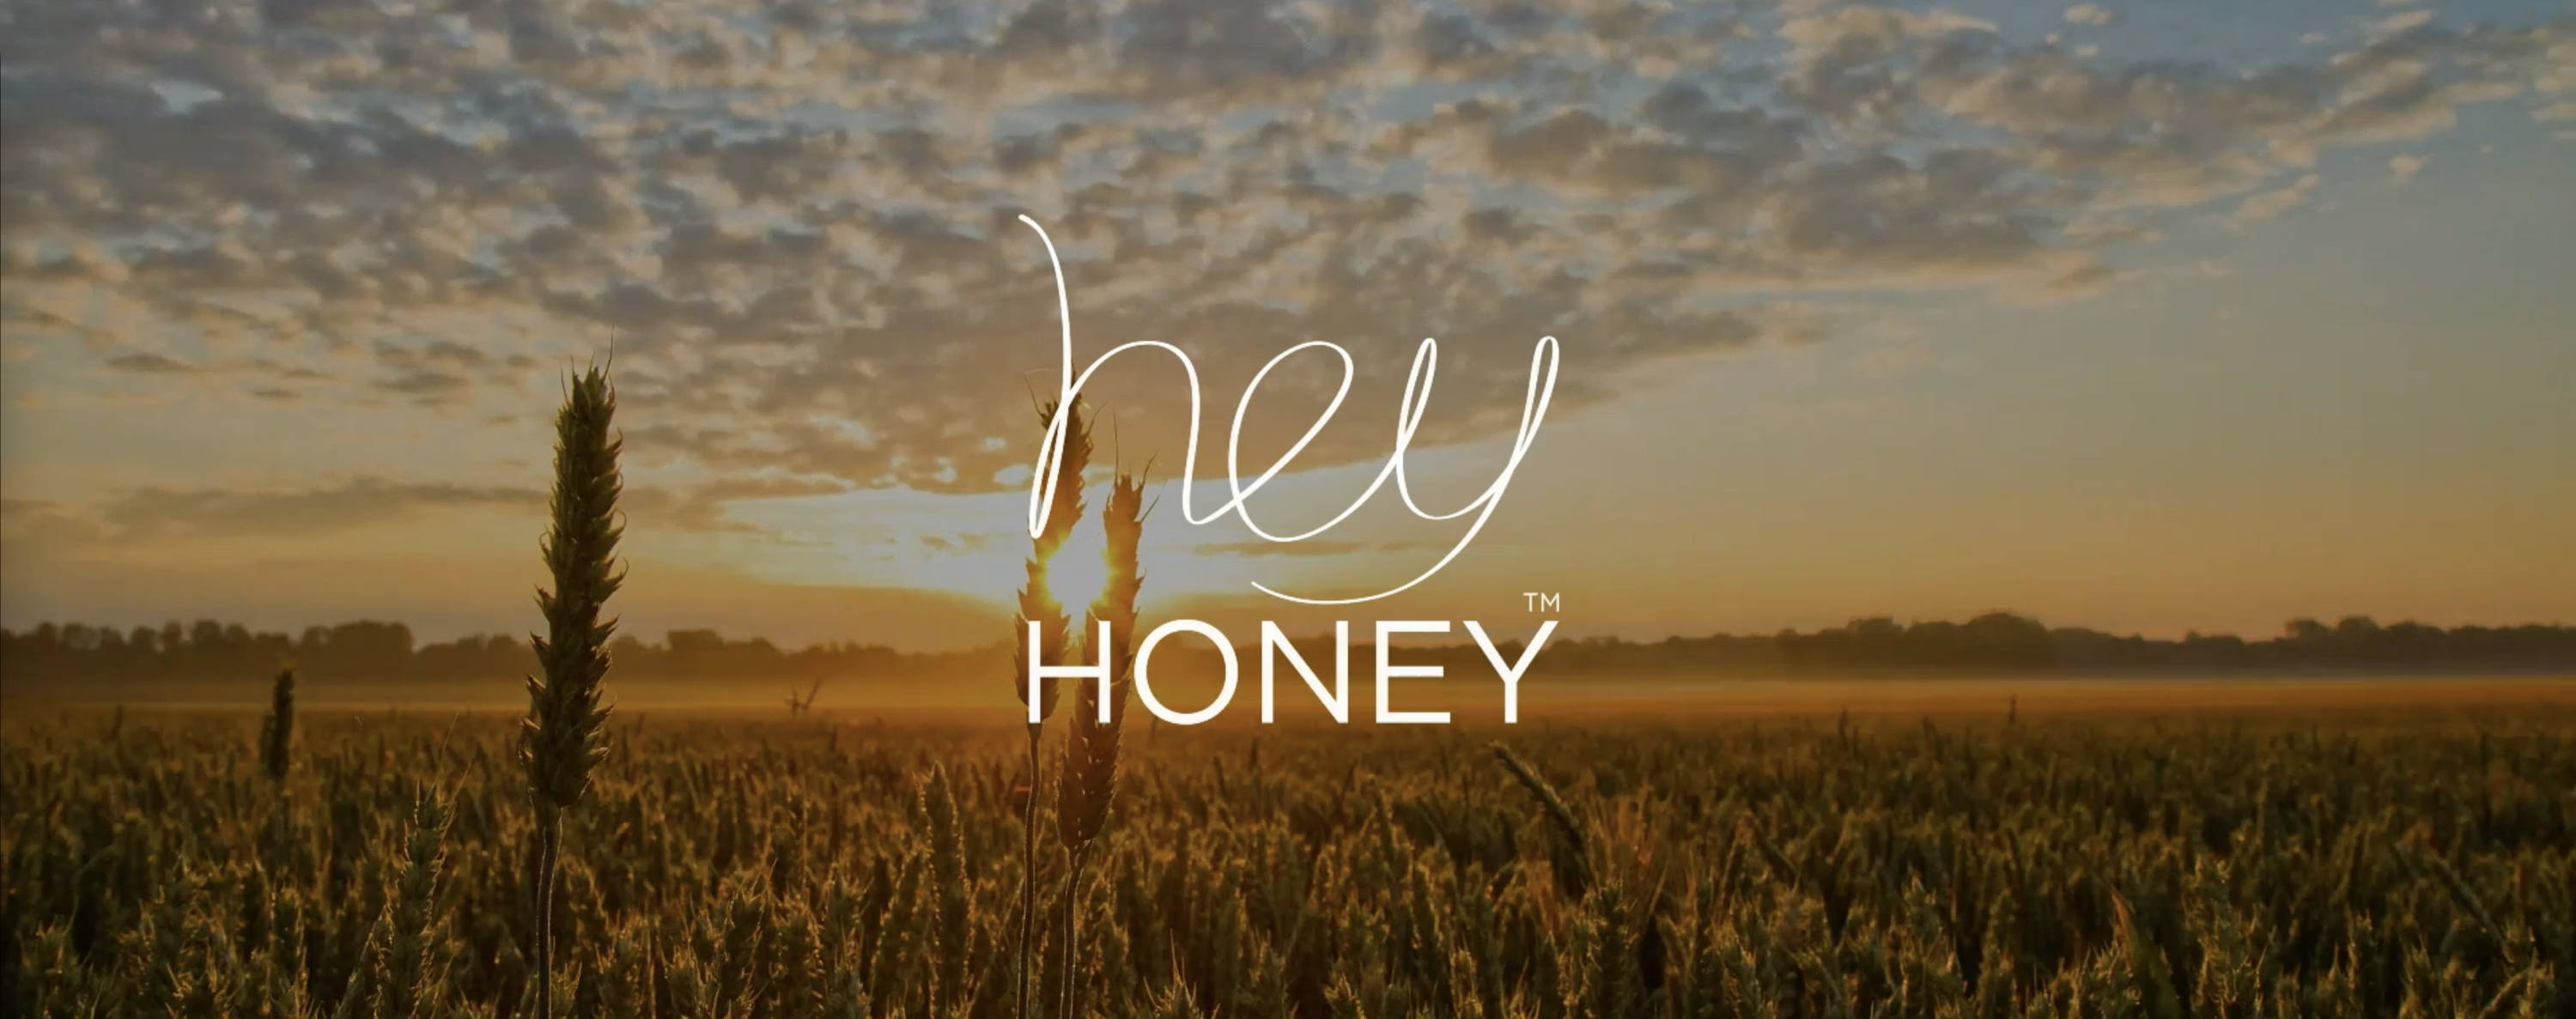 The benefits of Hey Honey Propolis Skincare – Hey Honey Beauty